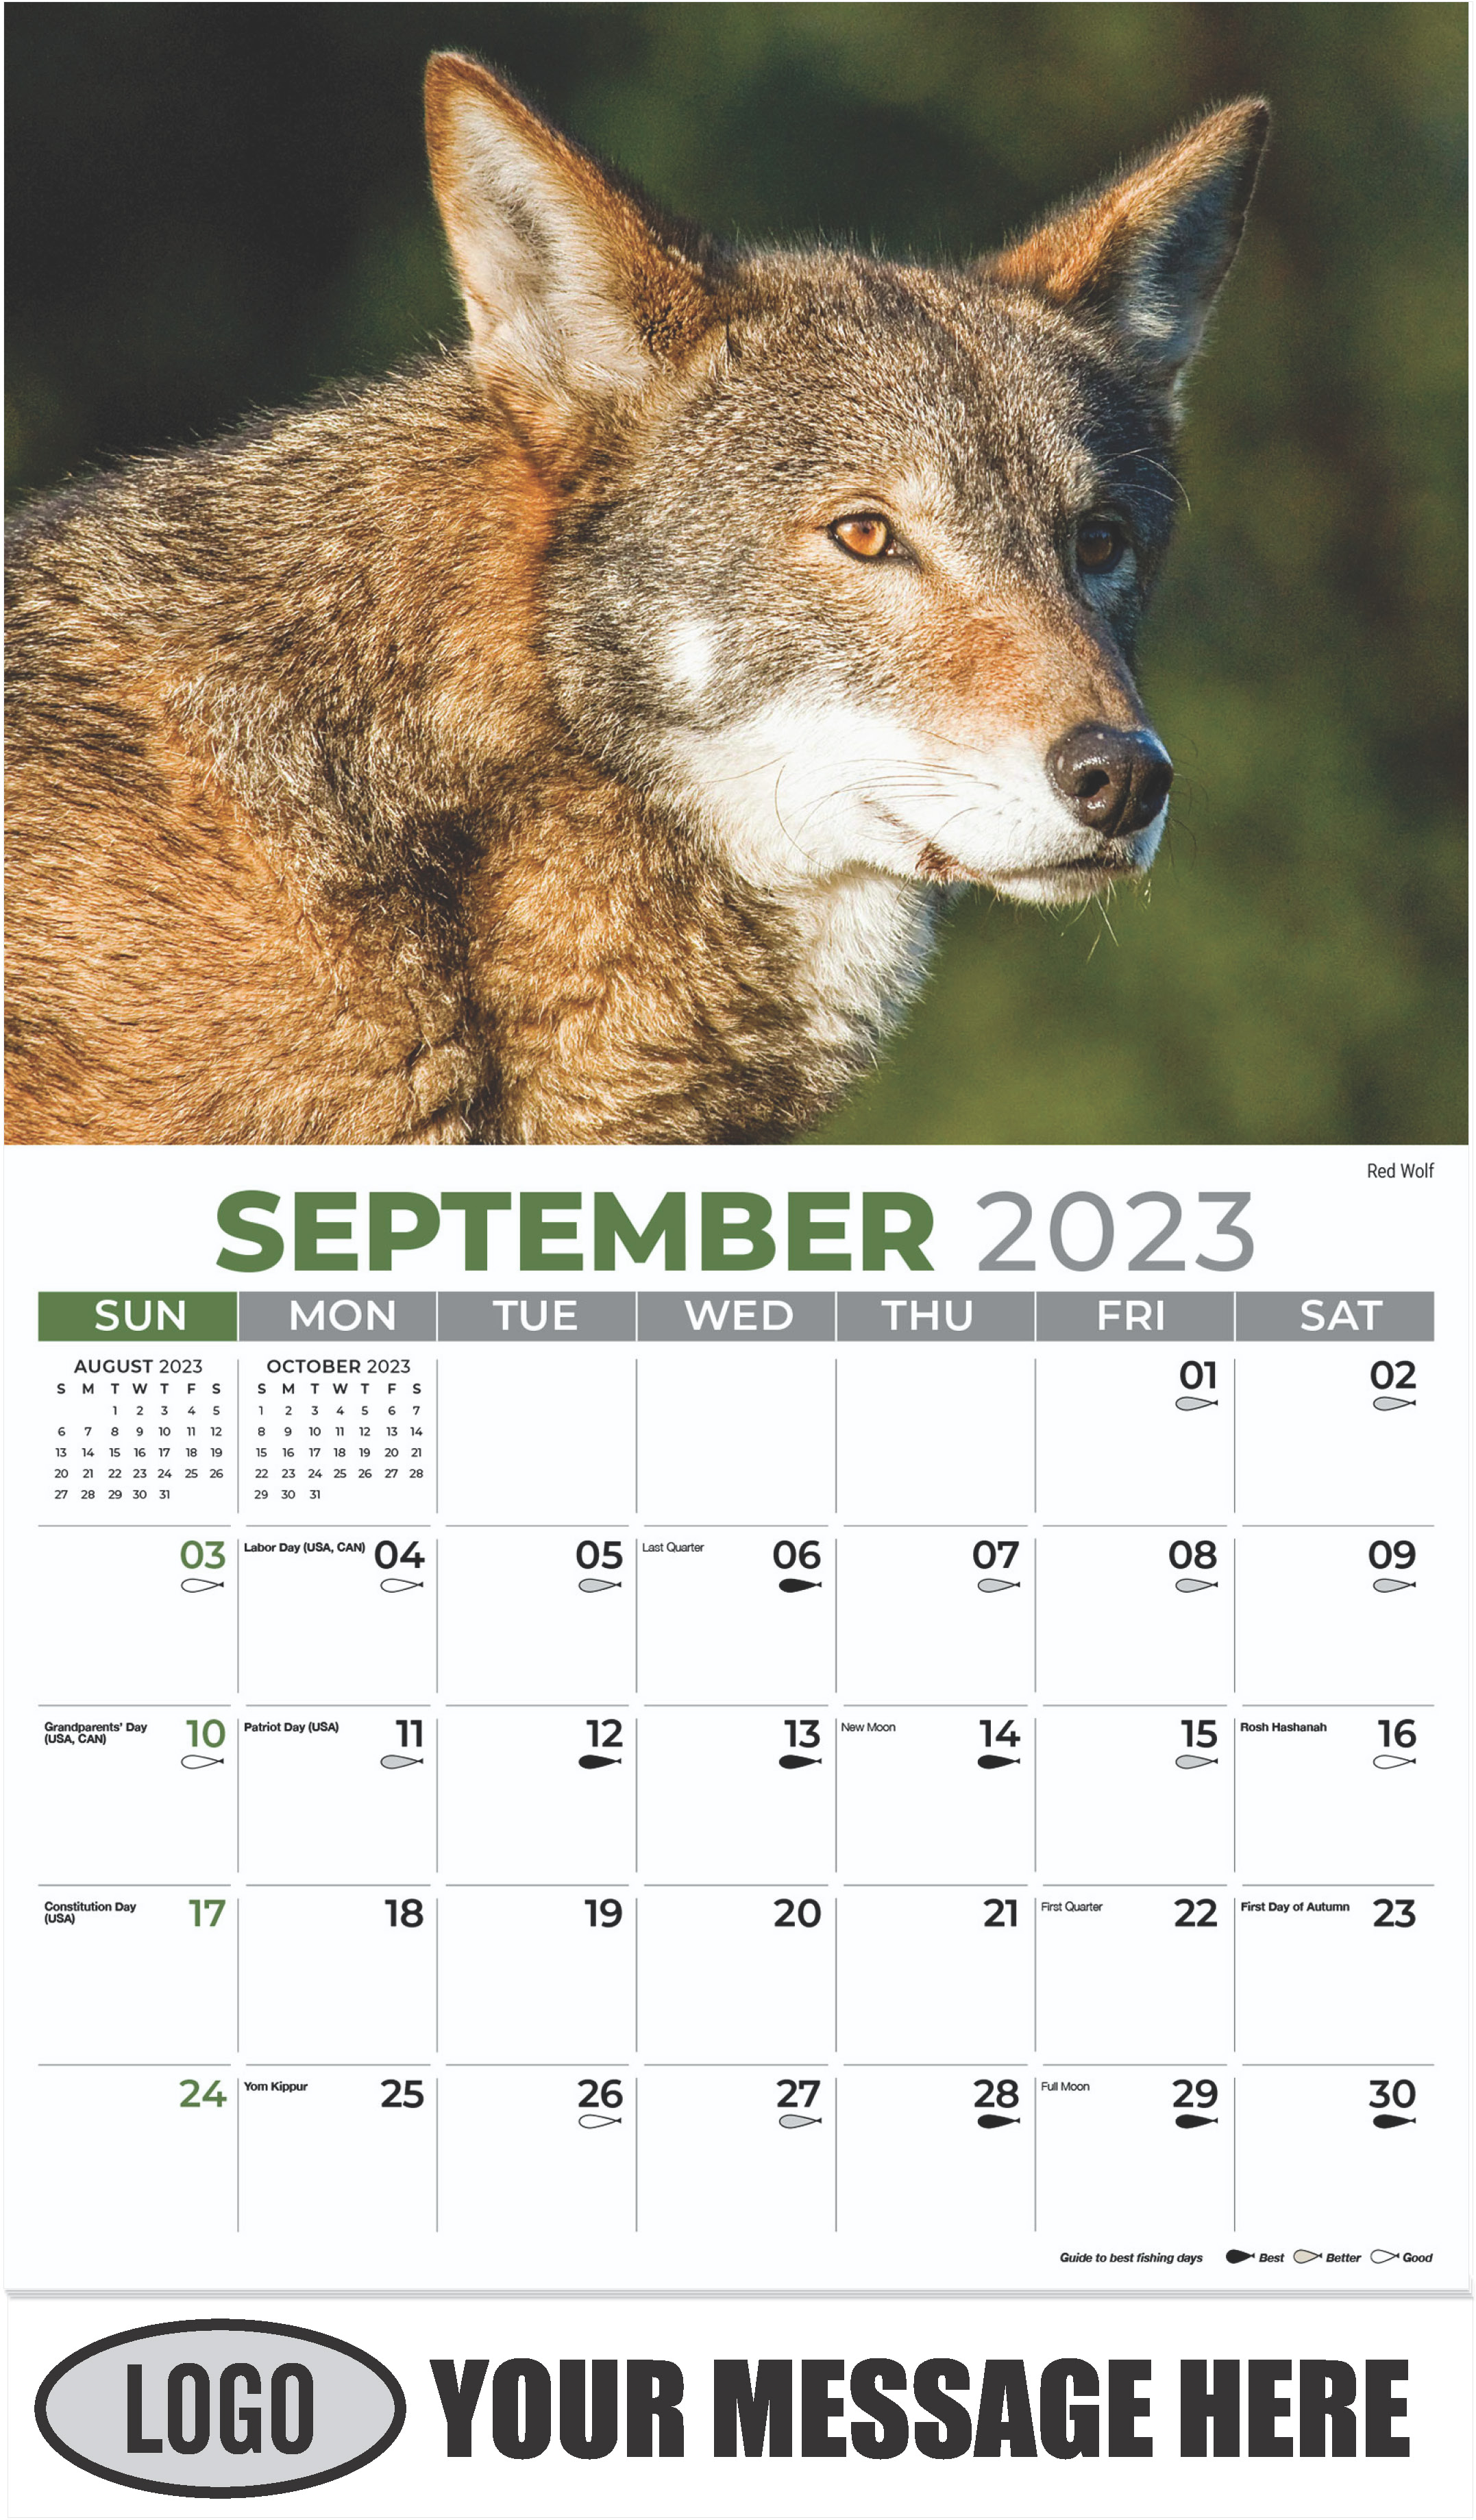 Red Wolf - September - North American Wildlife 2023 Promotional Calendar